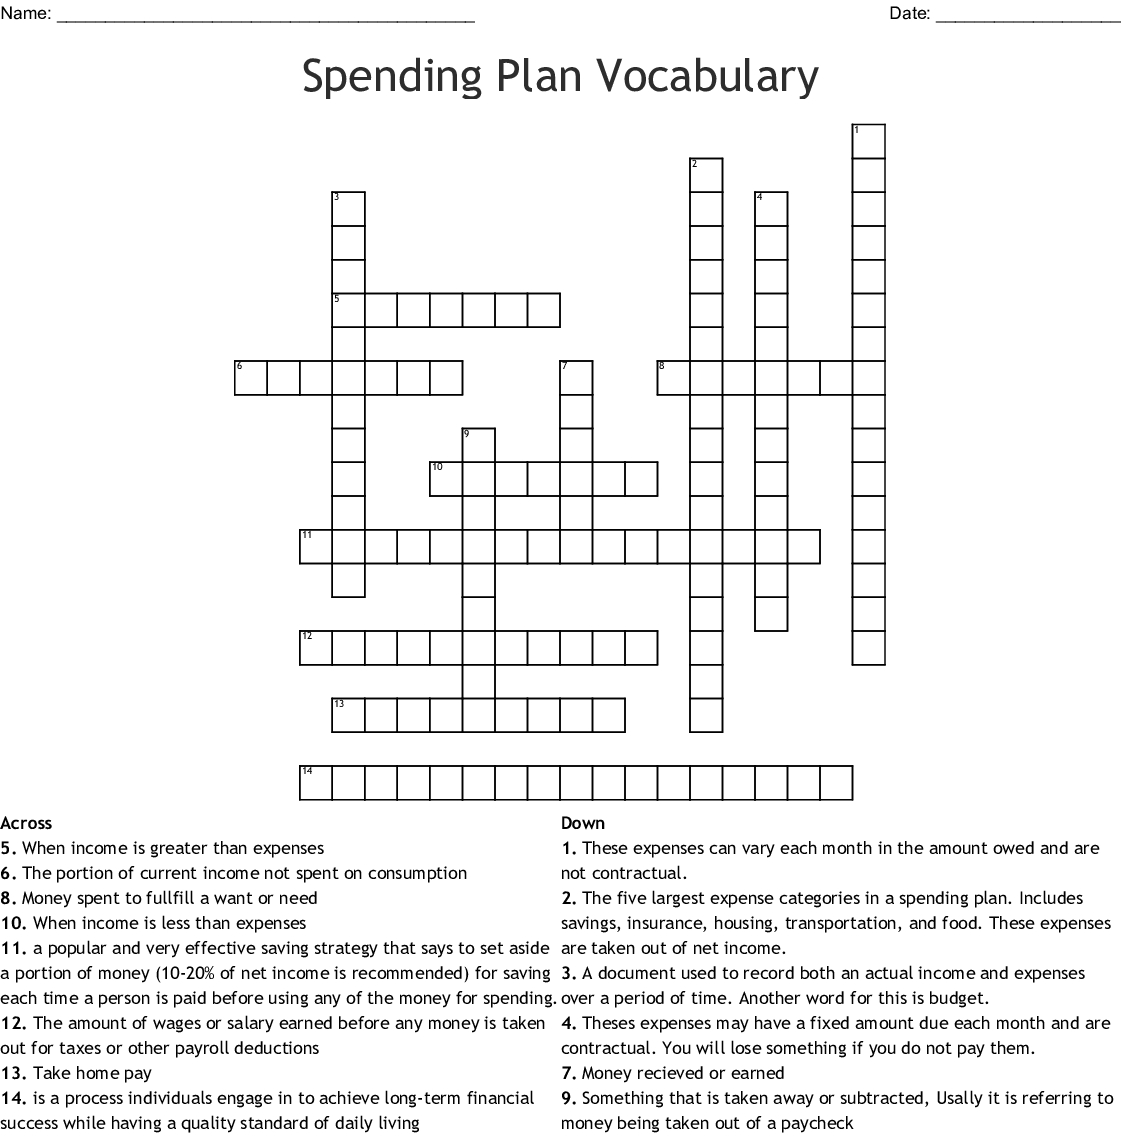 Spending Plan Vocabulary Crossword  Word